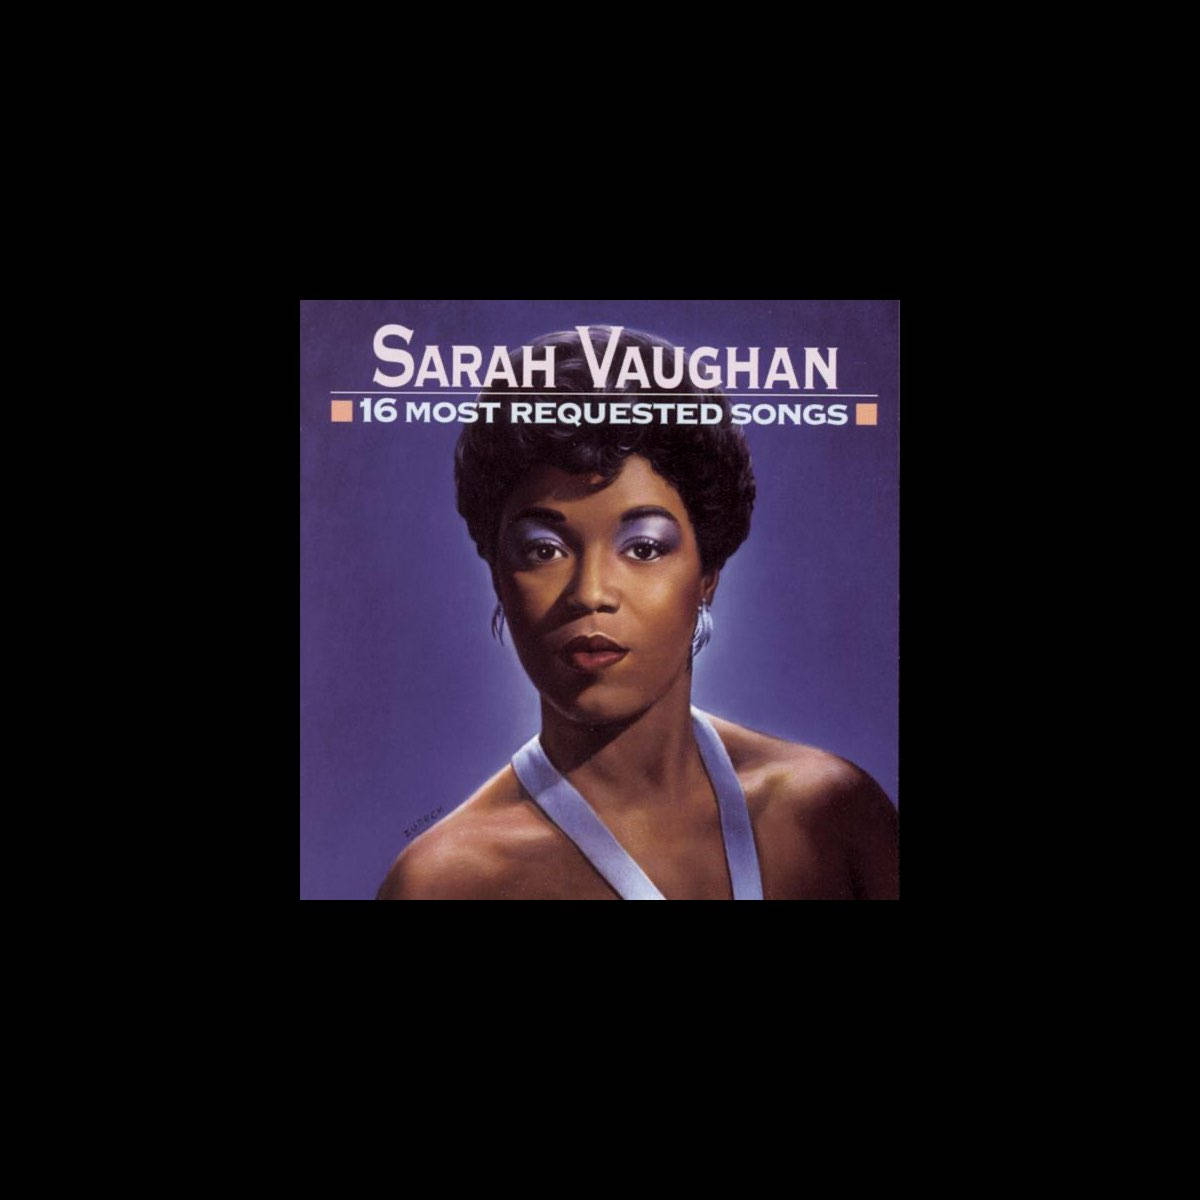 Sarahvaughan, Amerikanische Jazz-sängerin Wallpaper